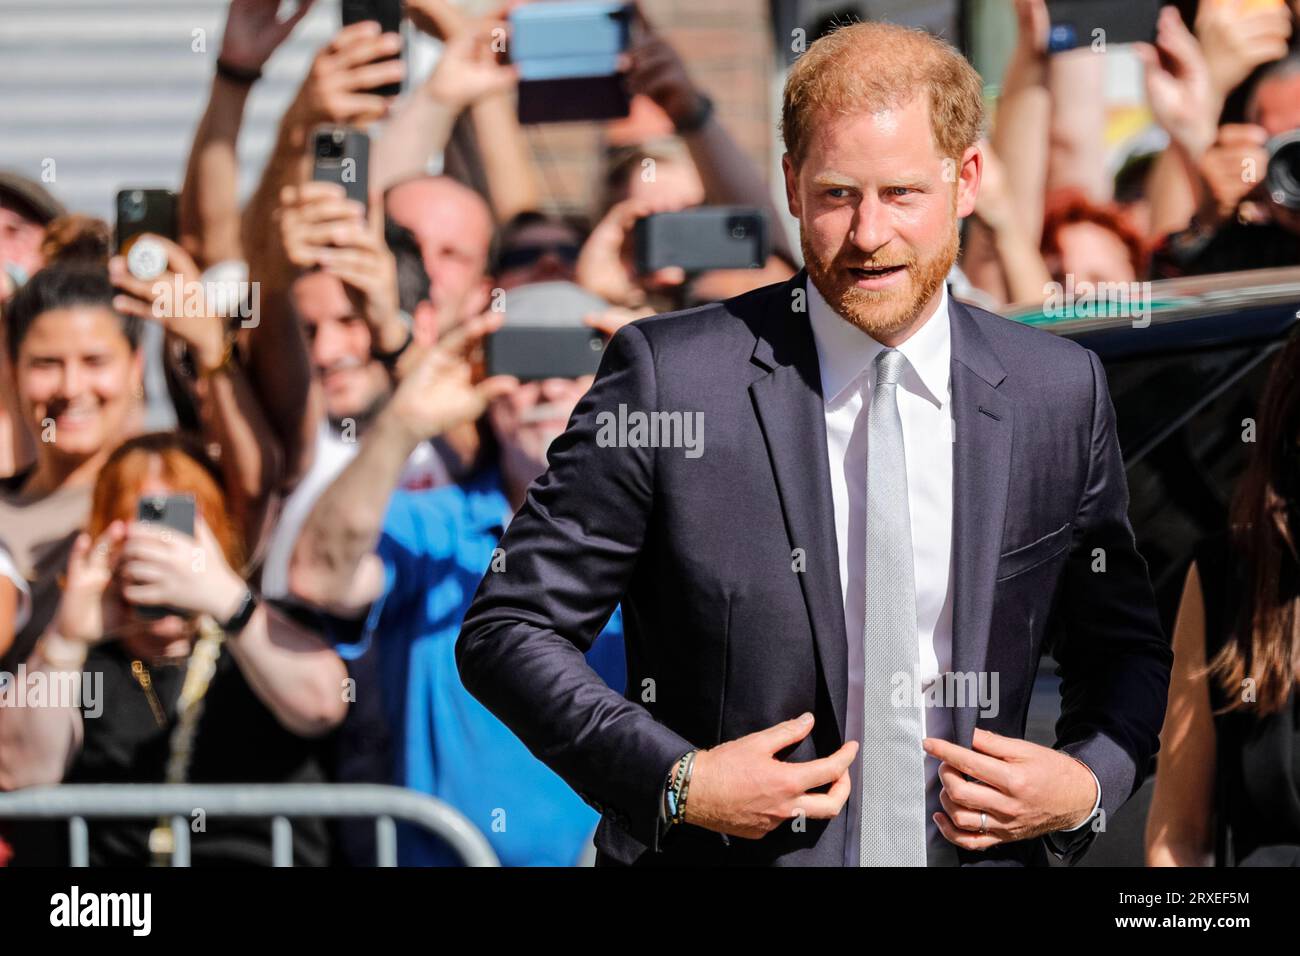 Prince Harry, the Duke of Sussex outside Düsseldorf City HalI nvictus Games reception, Germany Stock Photo